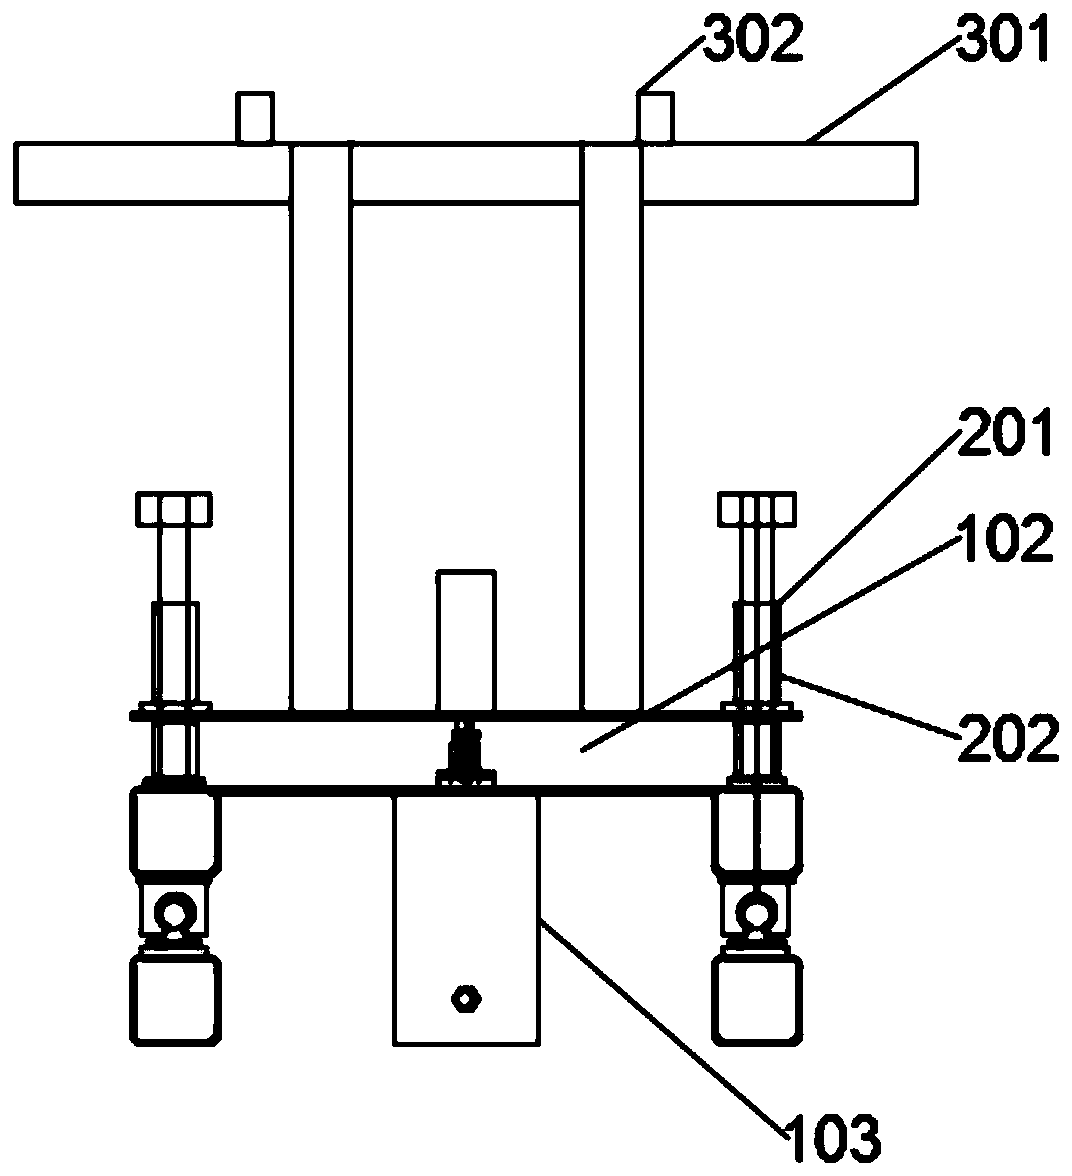 Automatic sampling surface density measurement mechanism for gypsum board production line